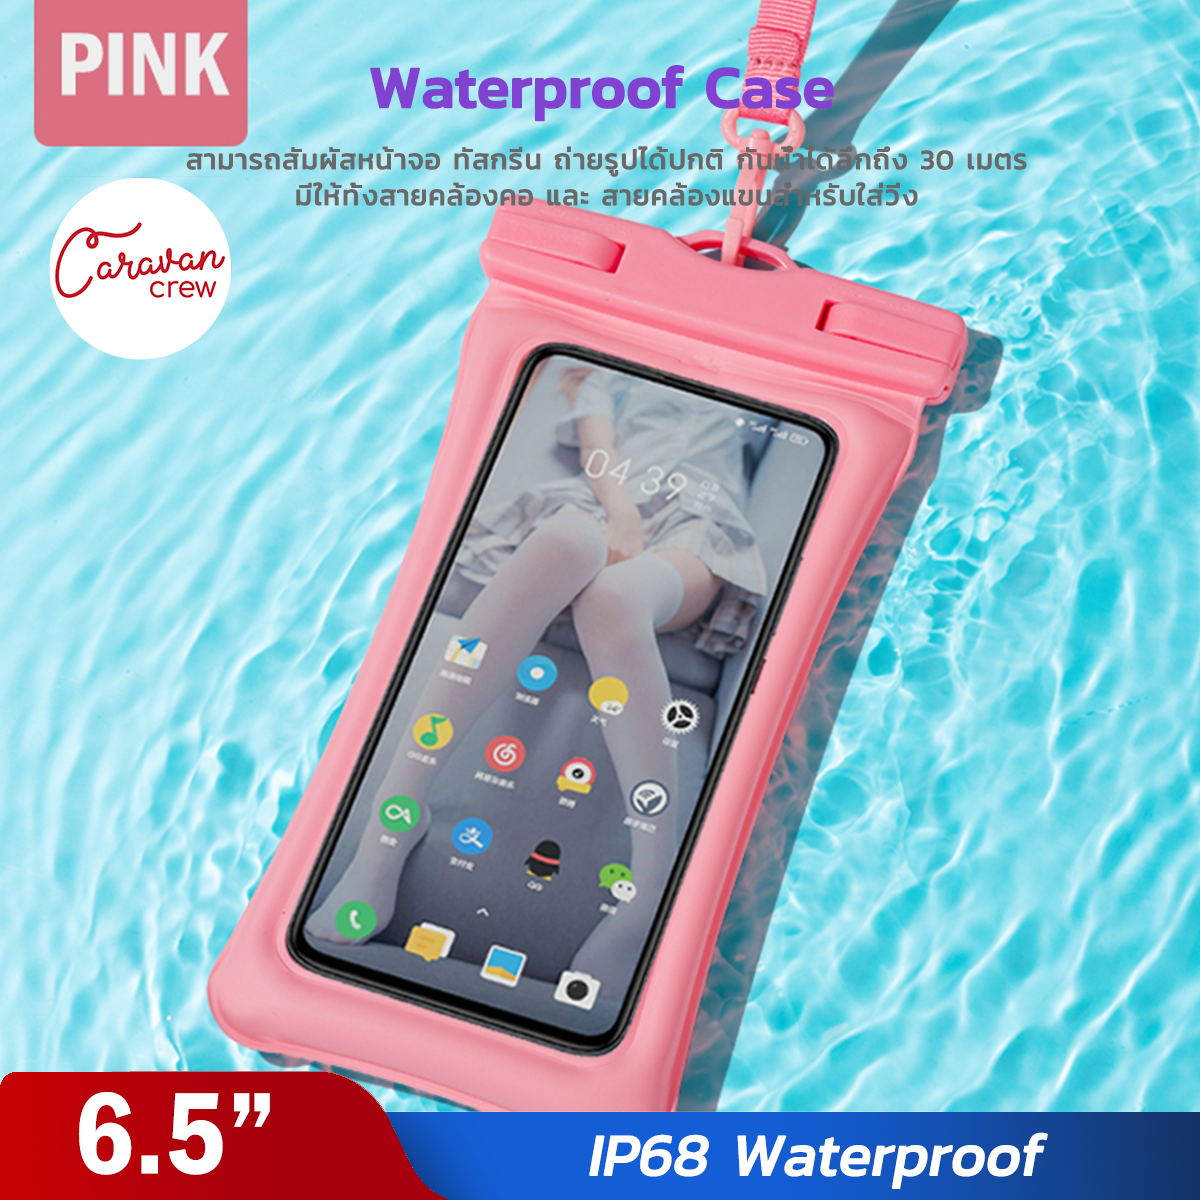 8# Caravan Crew ซองกันน้ำ และ สายคล้องแขน waterproof bag กระเป๋ากันน้ํา ซองกันน้ำมือถือ ซองใส่มือถือกันน้ํา ซองกันน้ําโทรศัพท์ iPhone Samsung Vivo OPPO Xiaomi Realme